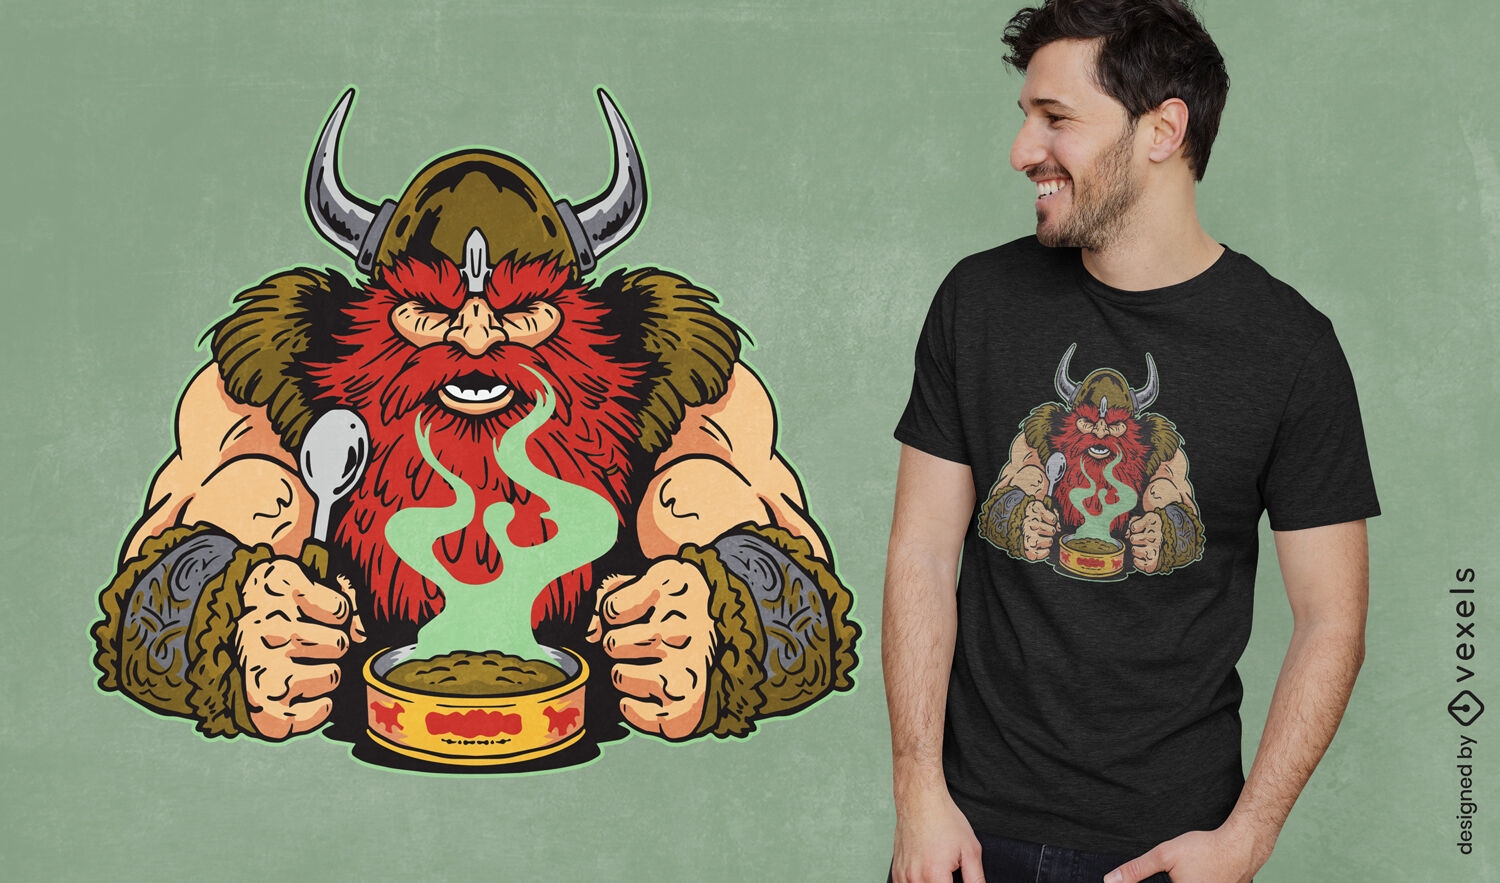 Ruiva viking guerreiro comendo design de camiseta